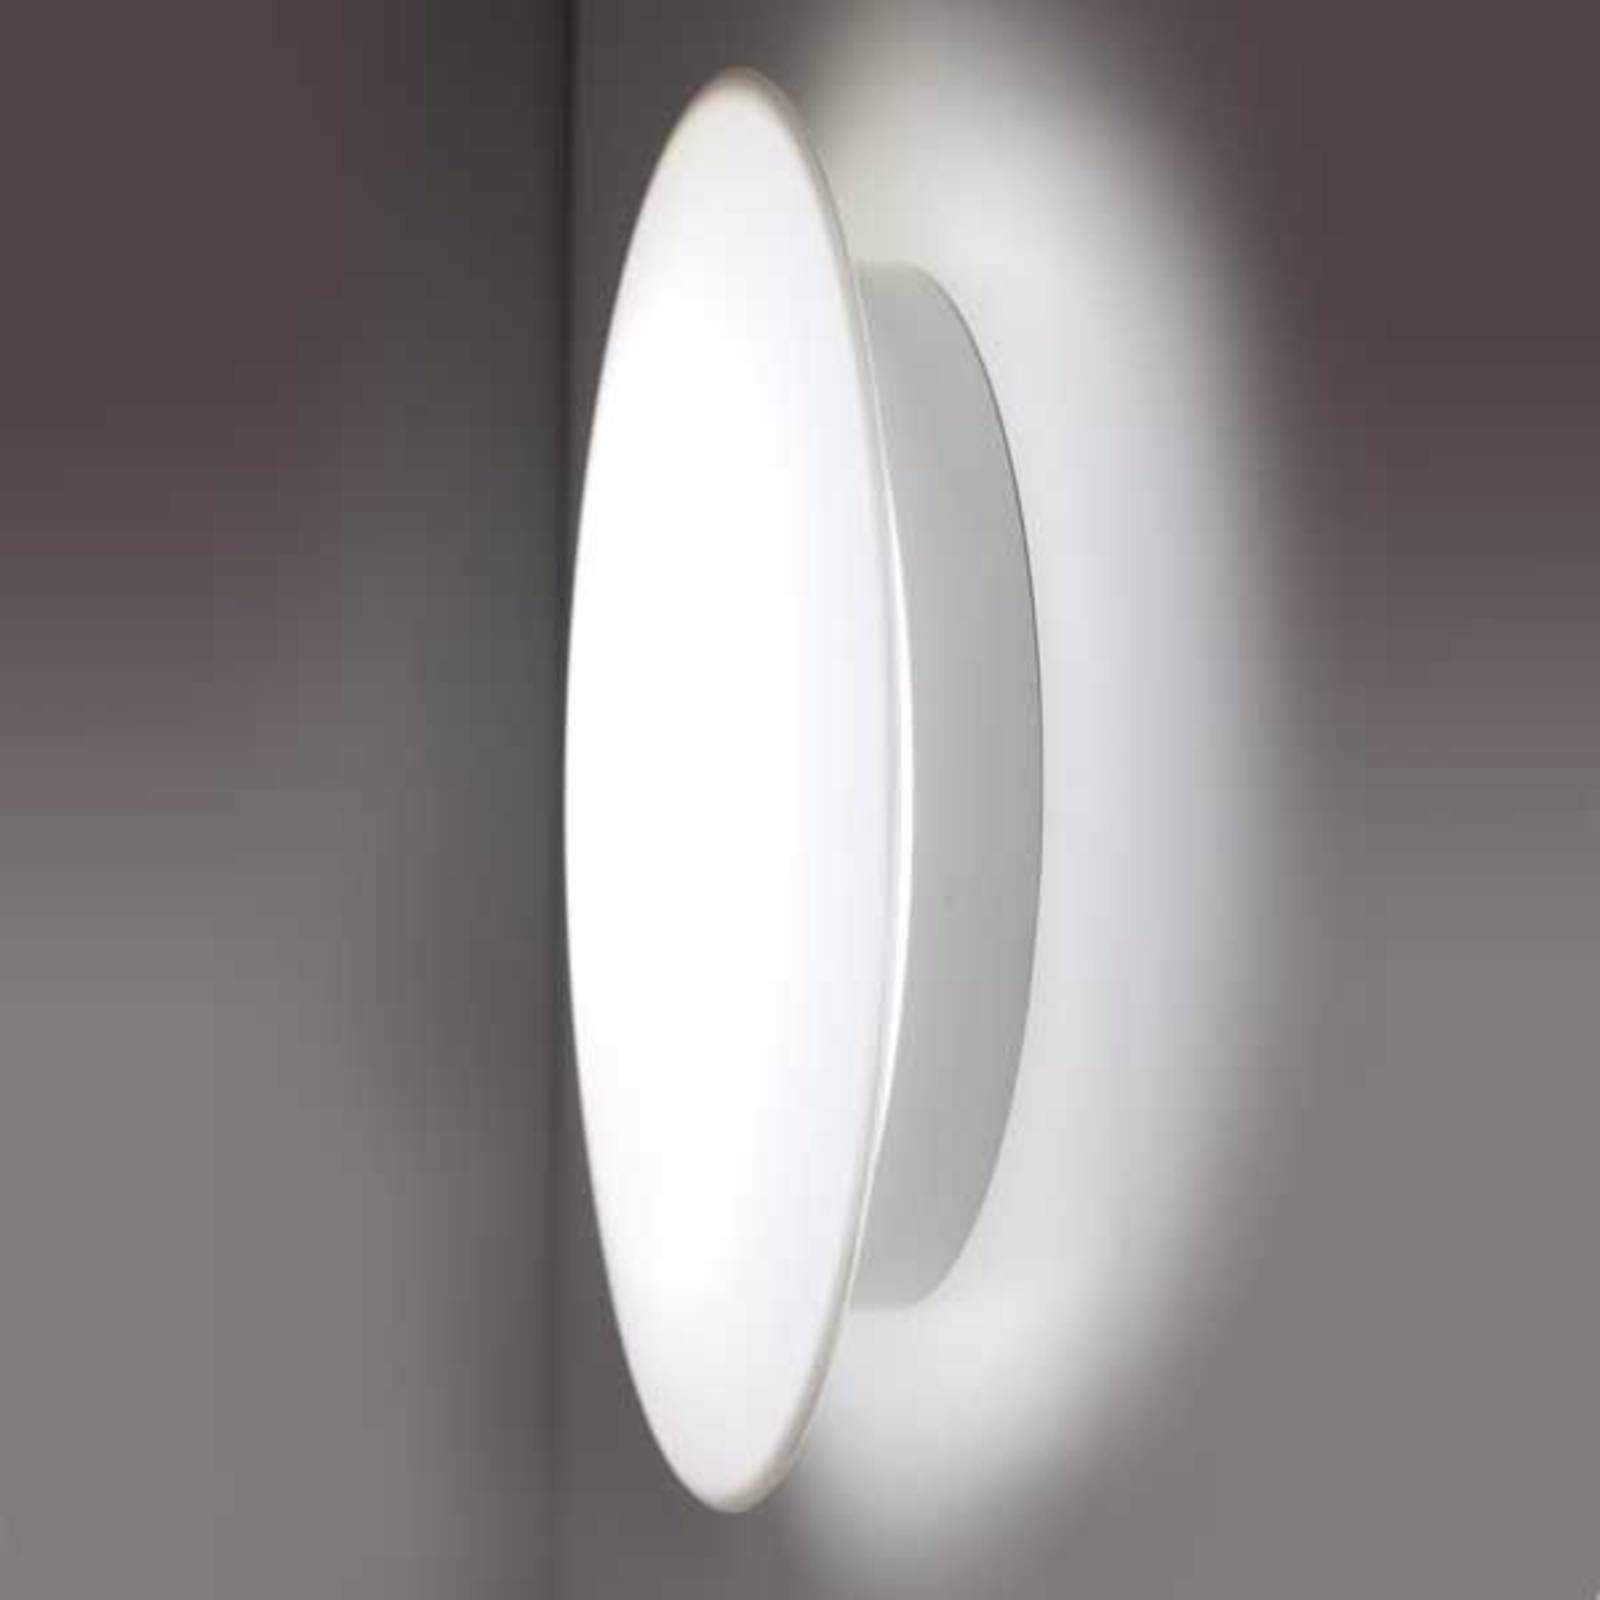 Akzentlicht Nástenné LED svietidlo Sun 3 z plastu 4 000 K 18 W, Obývacia izba / jedáleň, ABS, polykarbonát, 18W